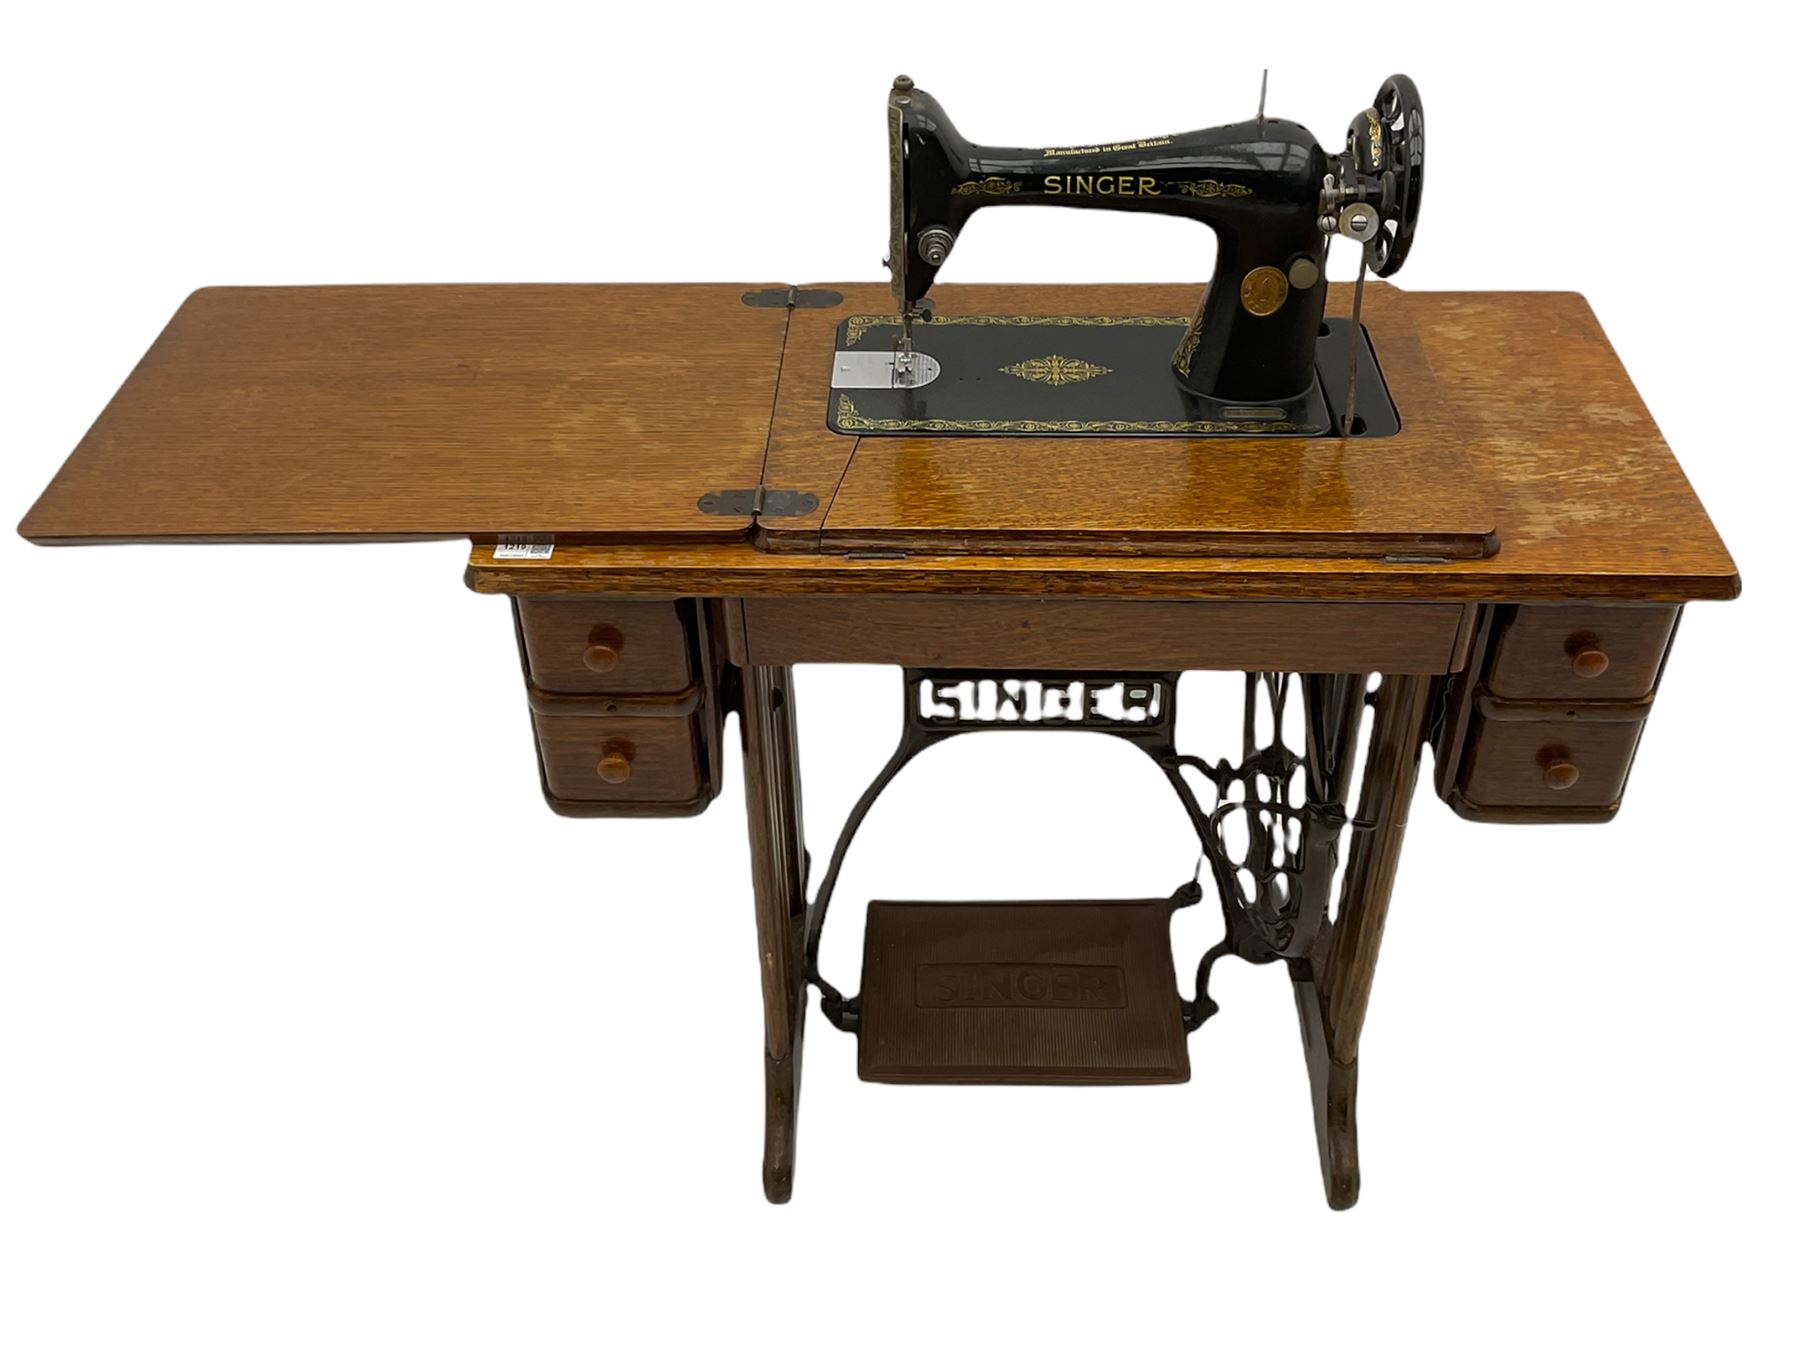 Singer treadle sewing machine - Image 2 of 12